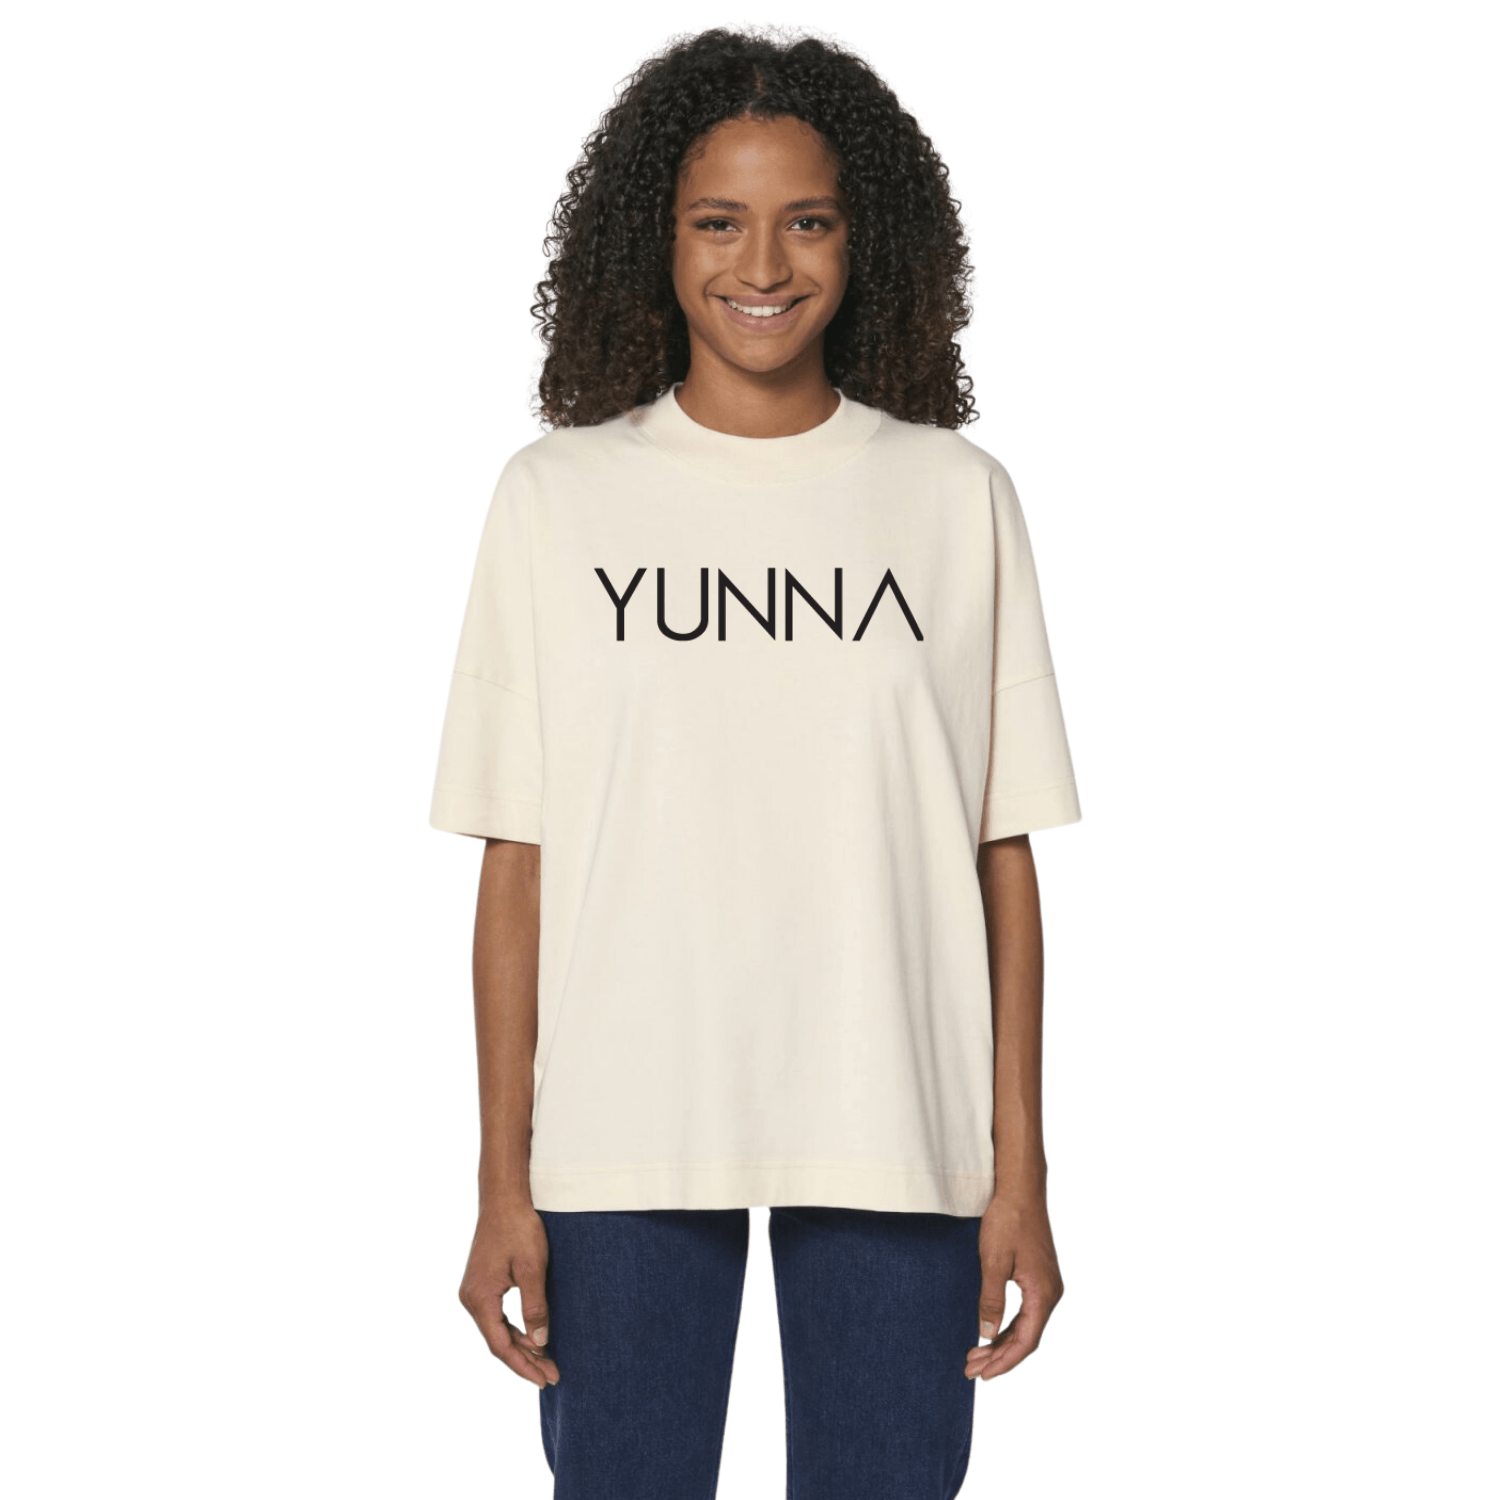 T-shirt Naturel Unisexe - Mission Y - Yunna France